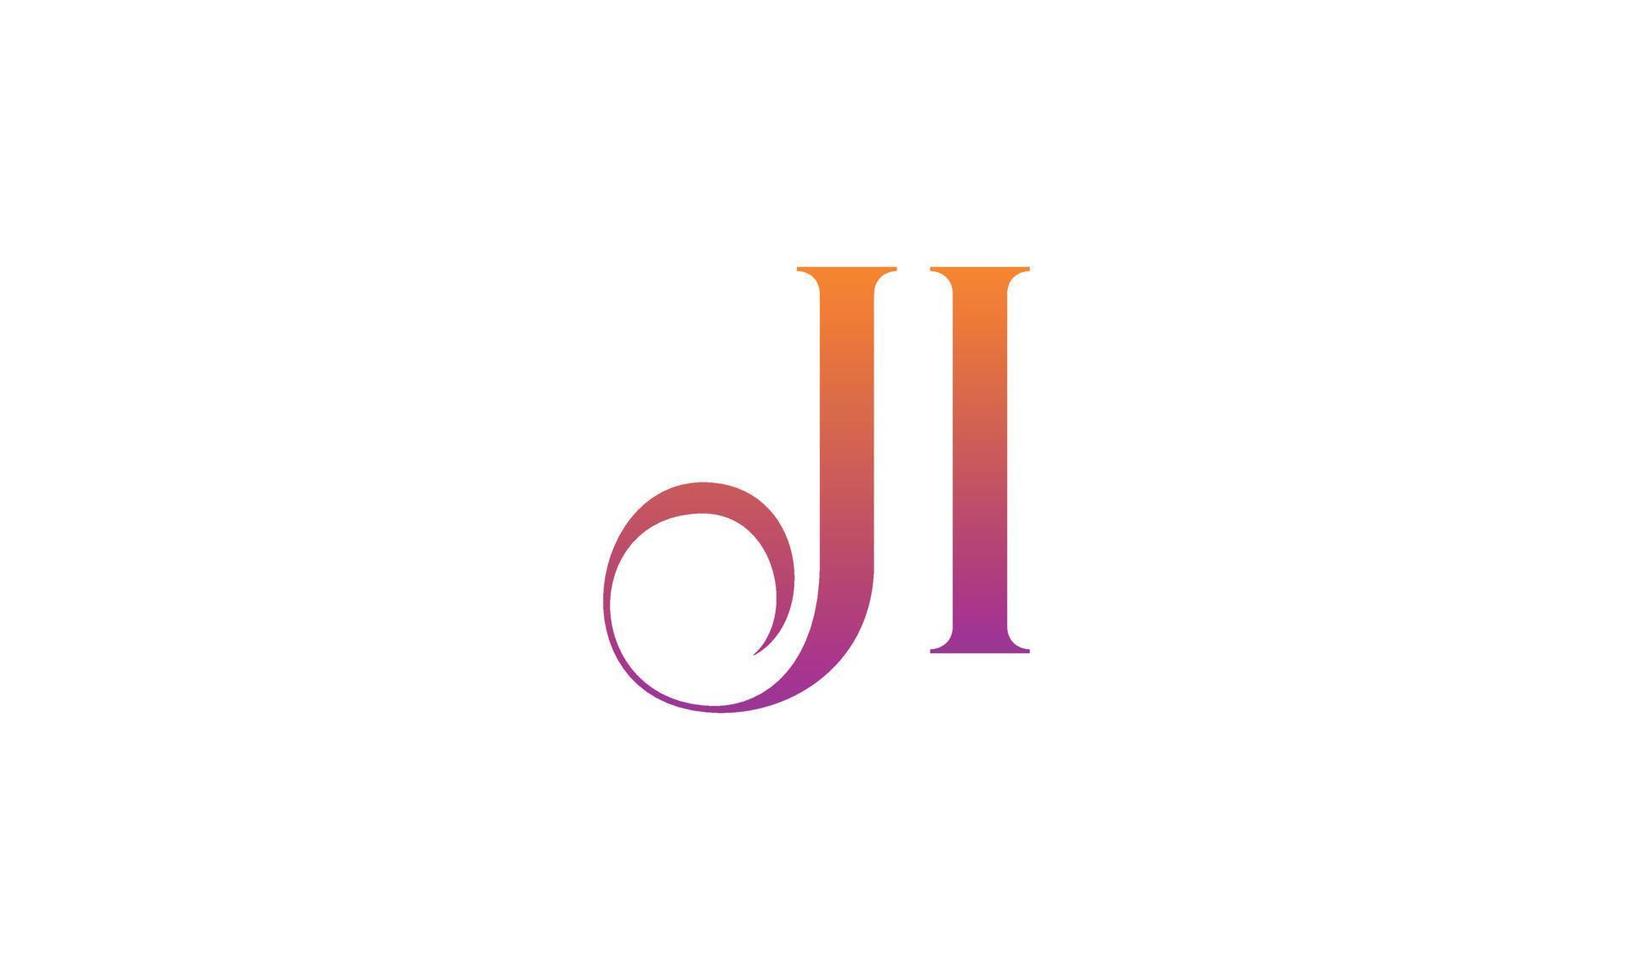 Buchstabe ji-Vektor-Logo kostenlose Vorlage kostenloser Vektor